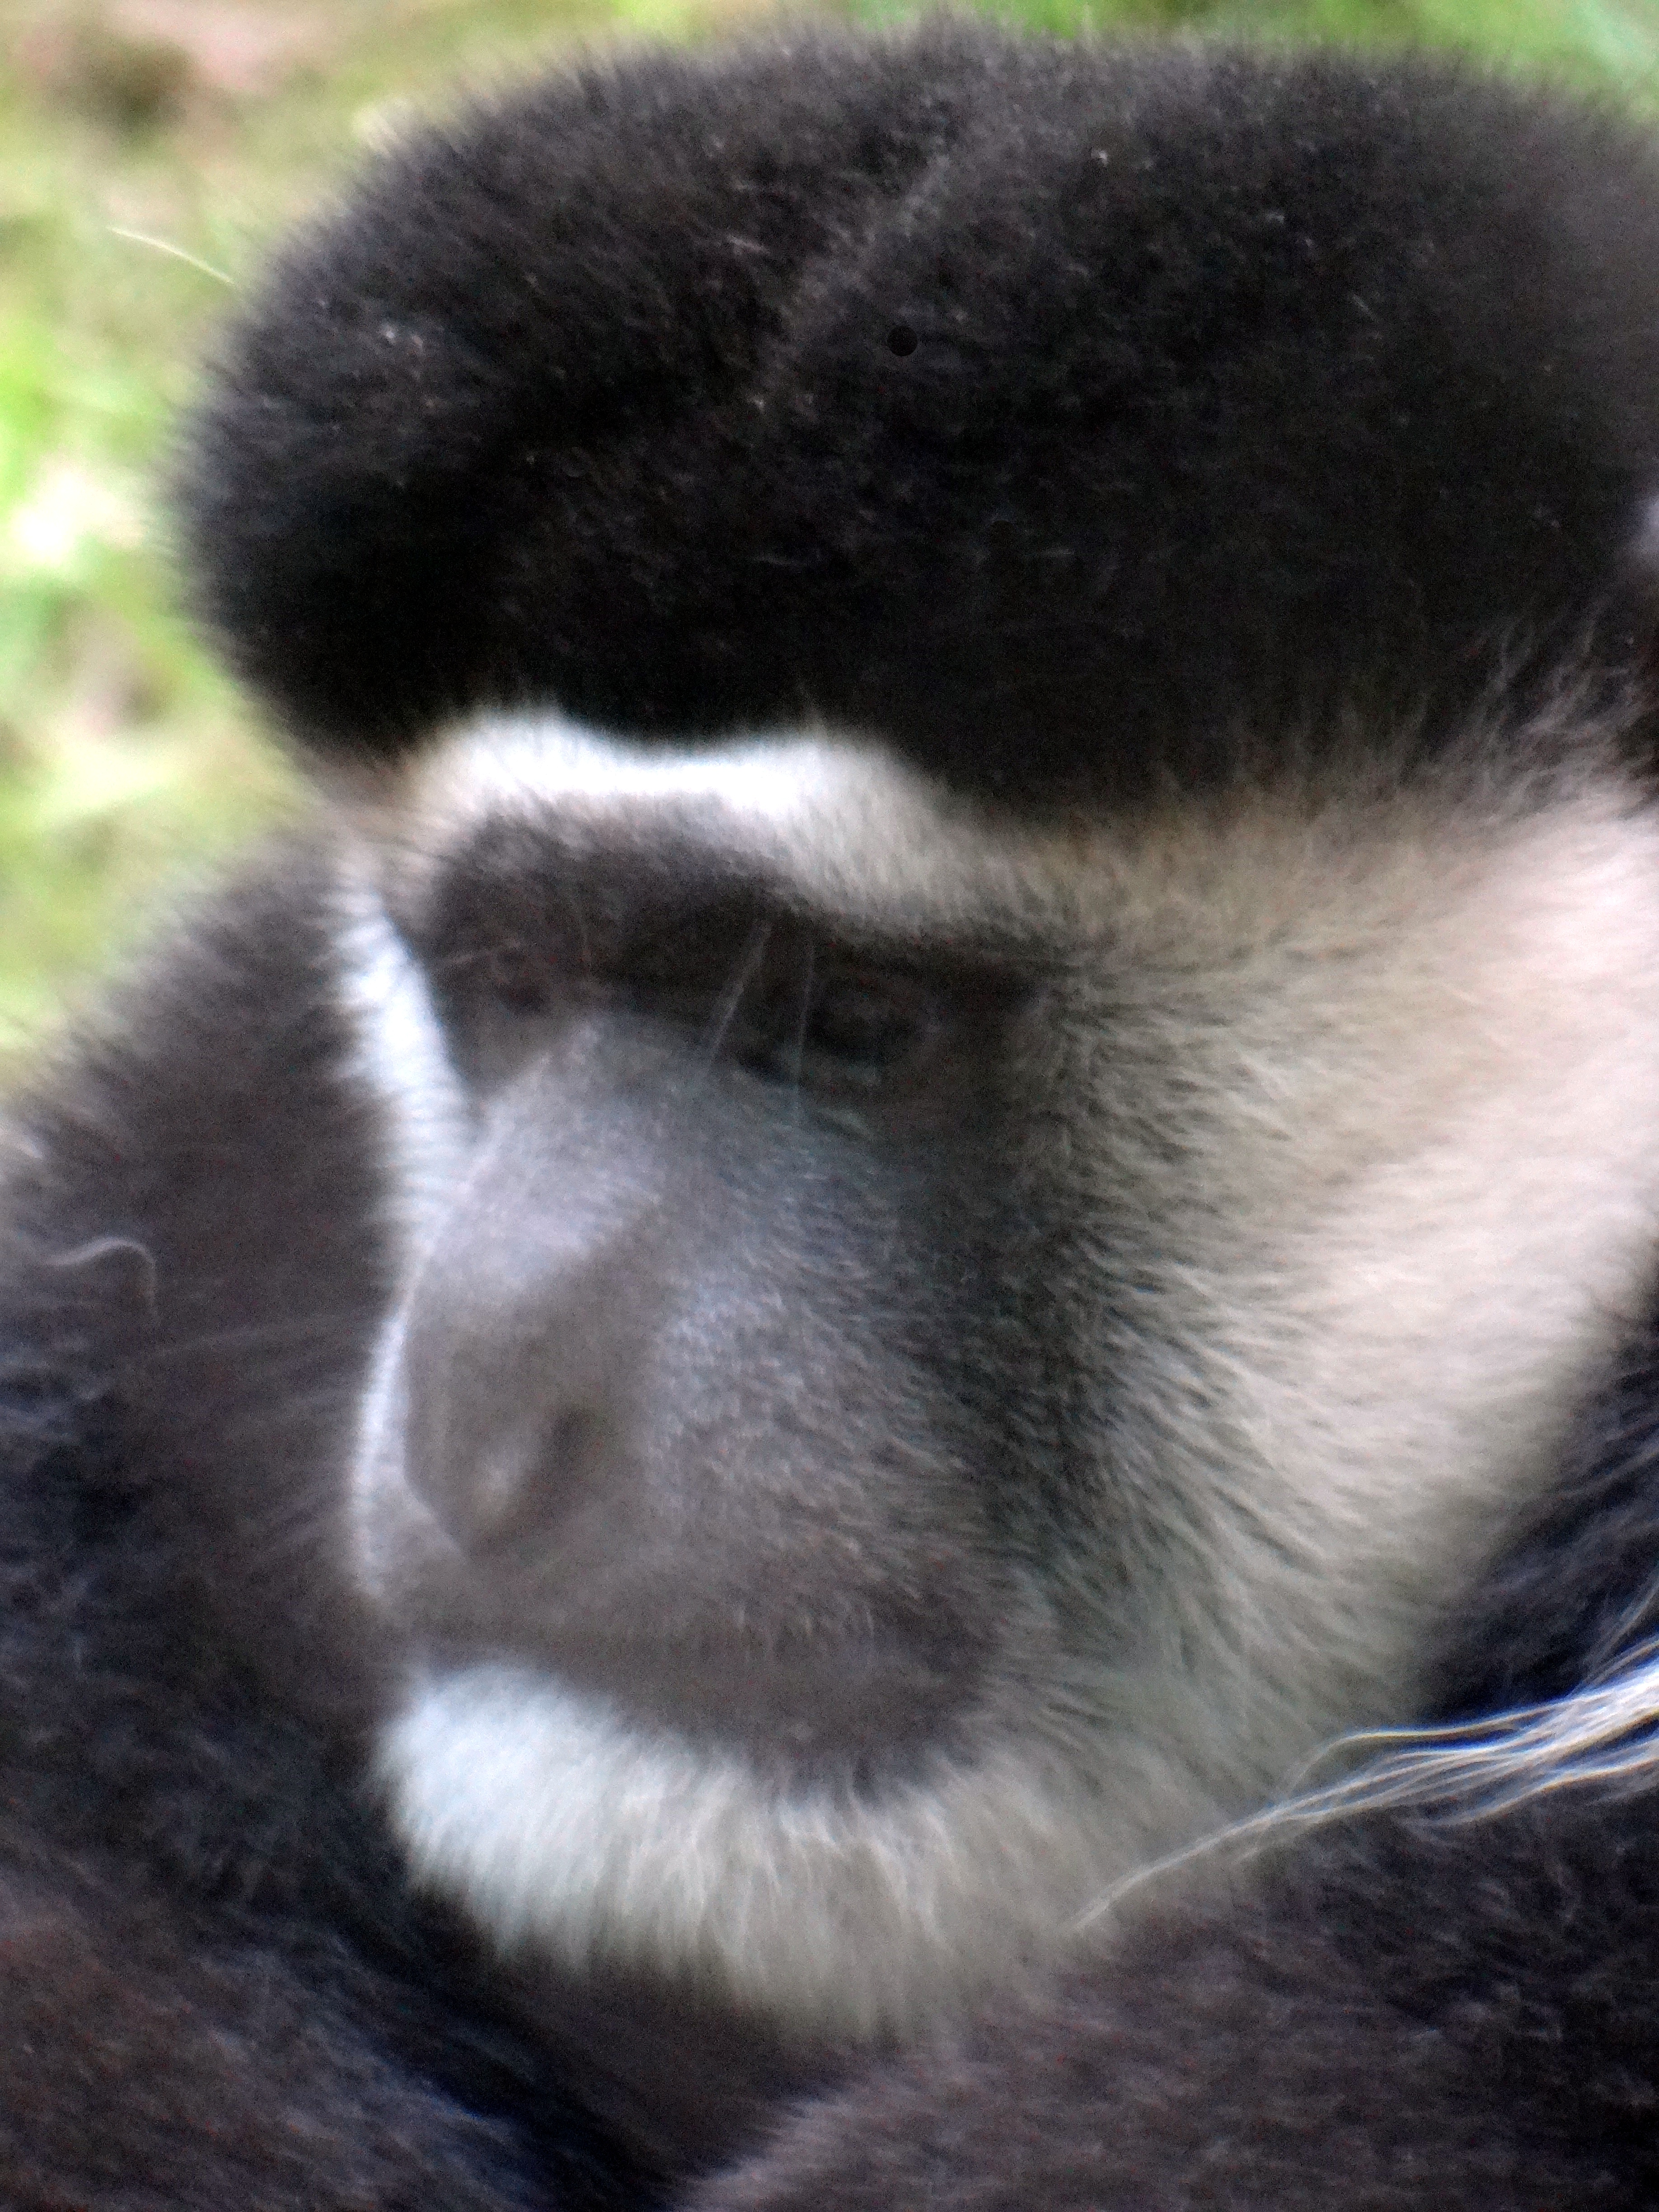 Colobus Monkey at Bronx Zoo, Congo Gorilla Forest exhibit